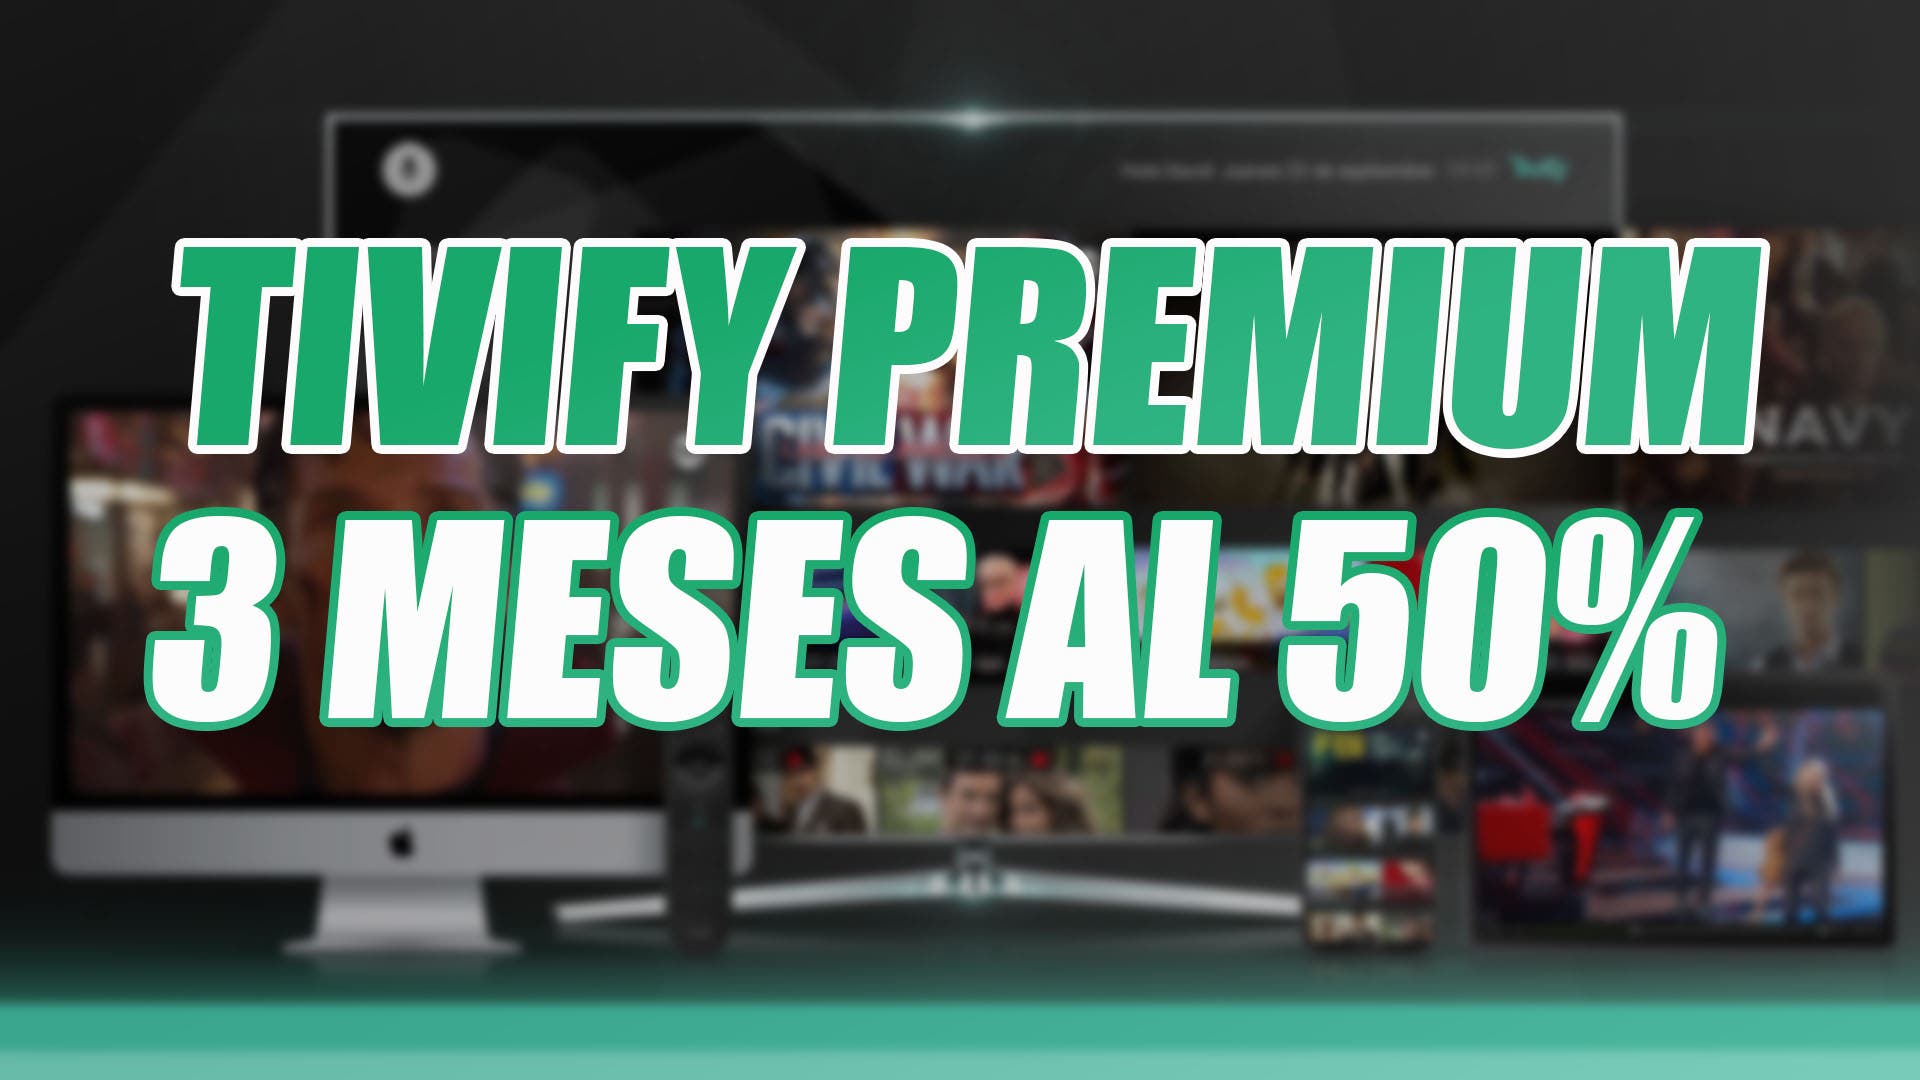 Tivify Premium: half price for 3 months